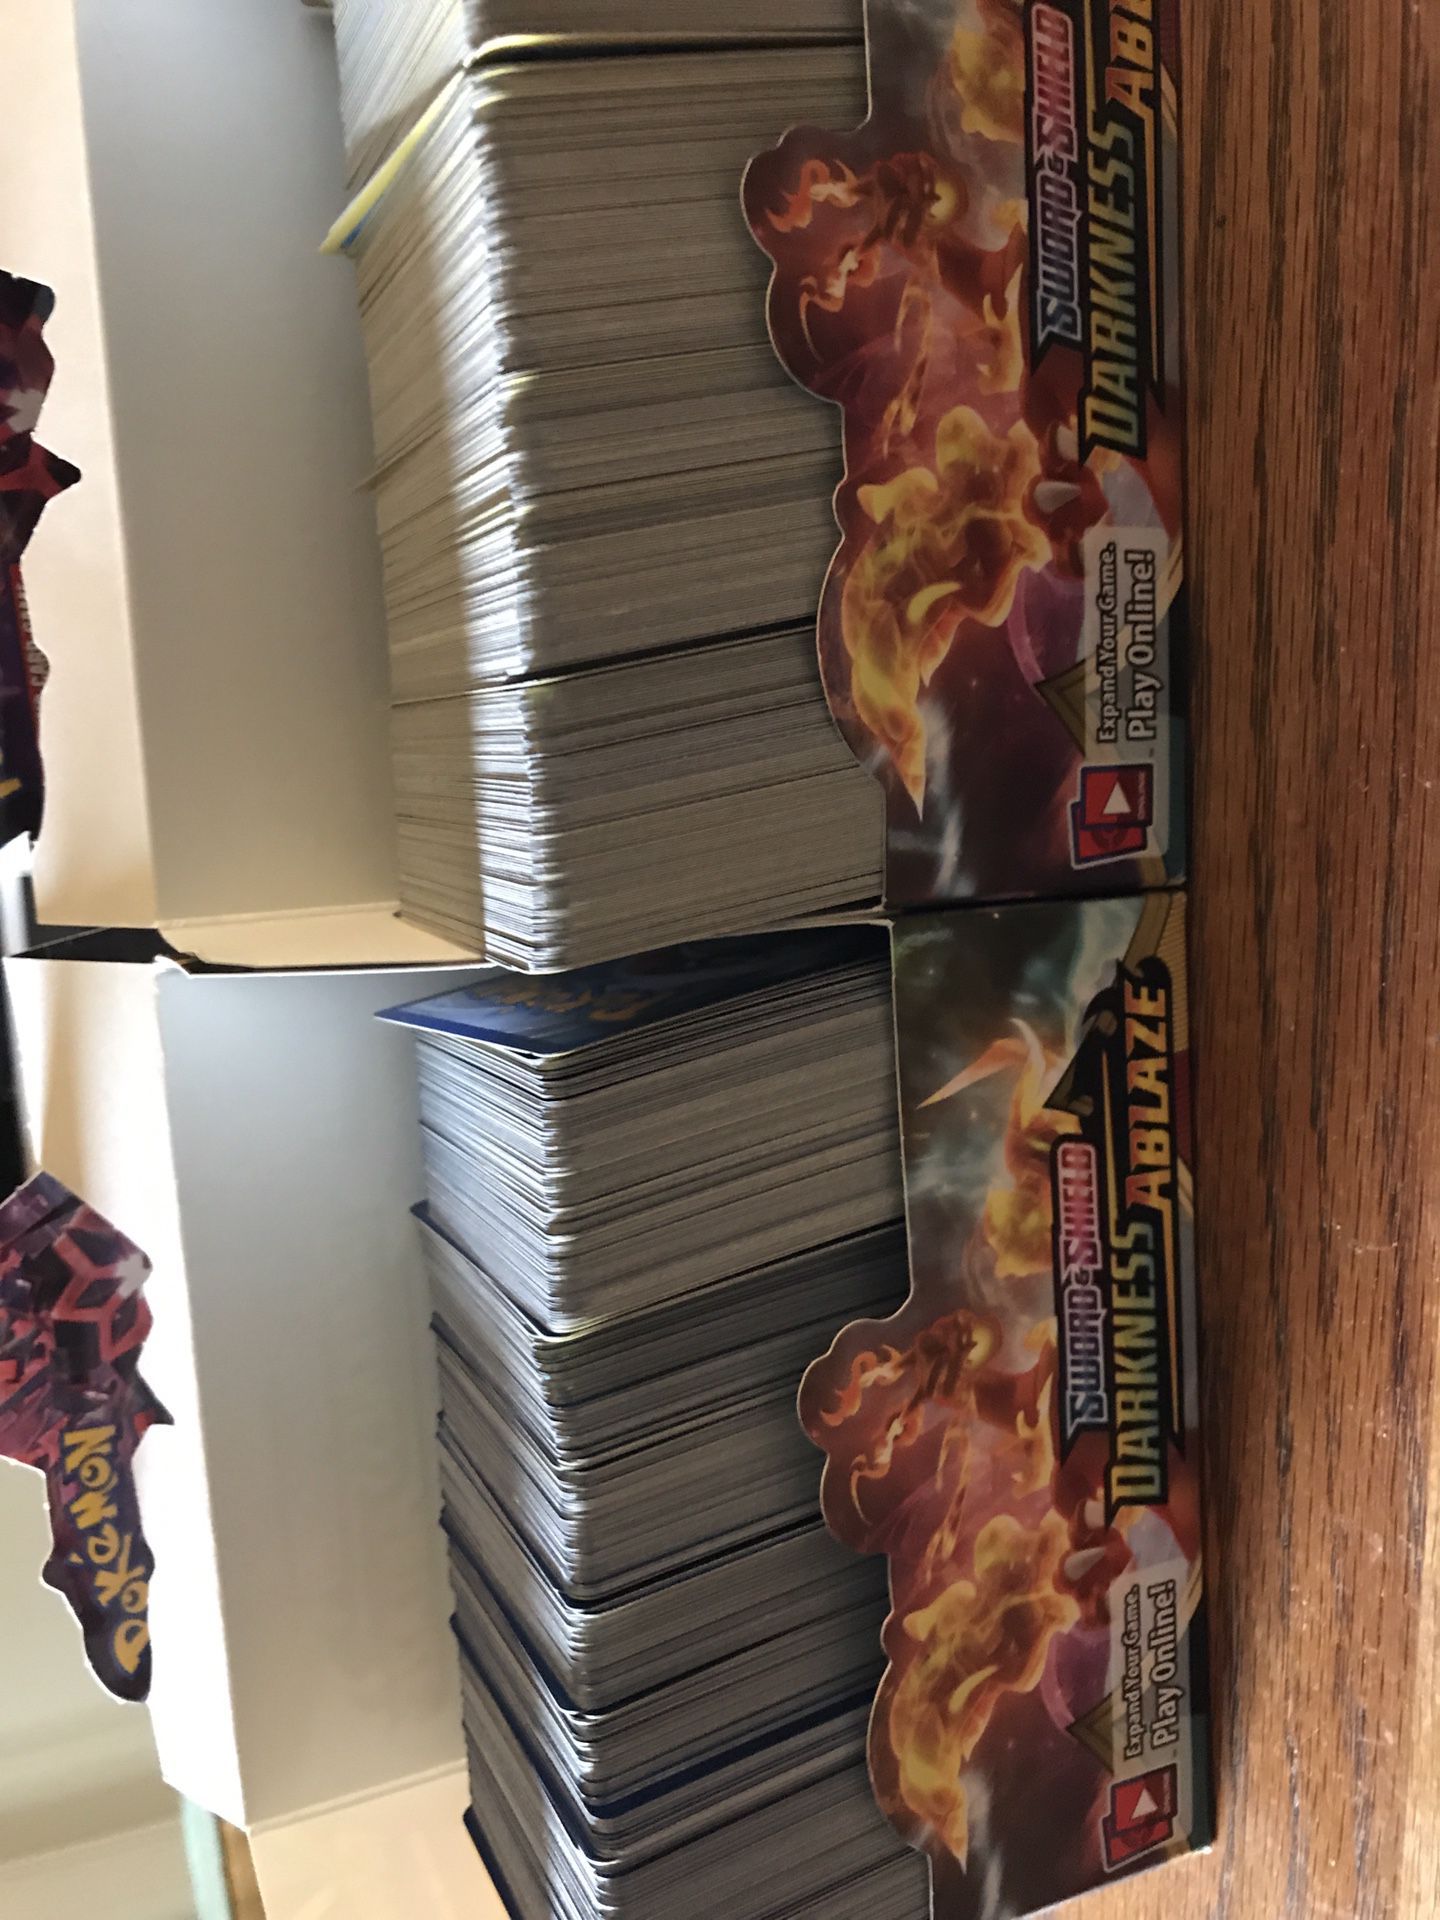 Pokémon darkness ablaze RHA card lot 1000 cards includes rares, holos reverse holos mint condition